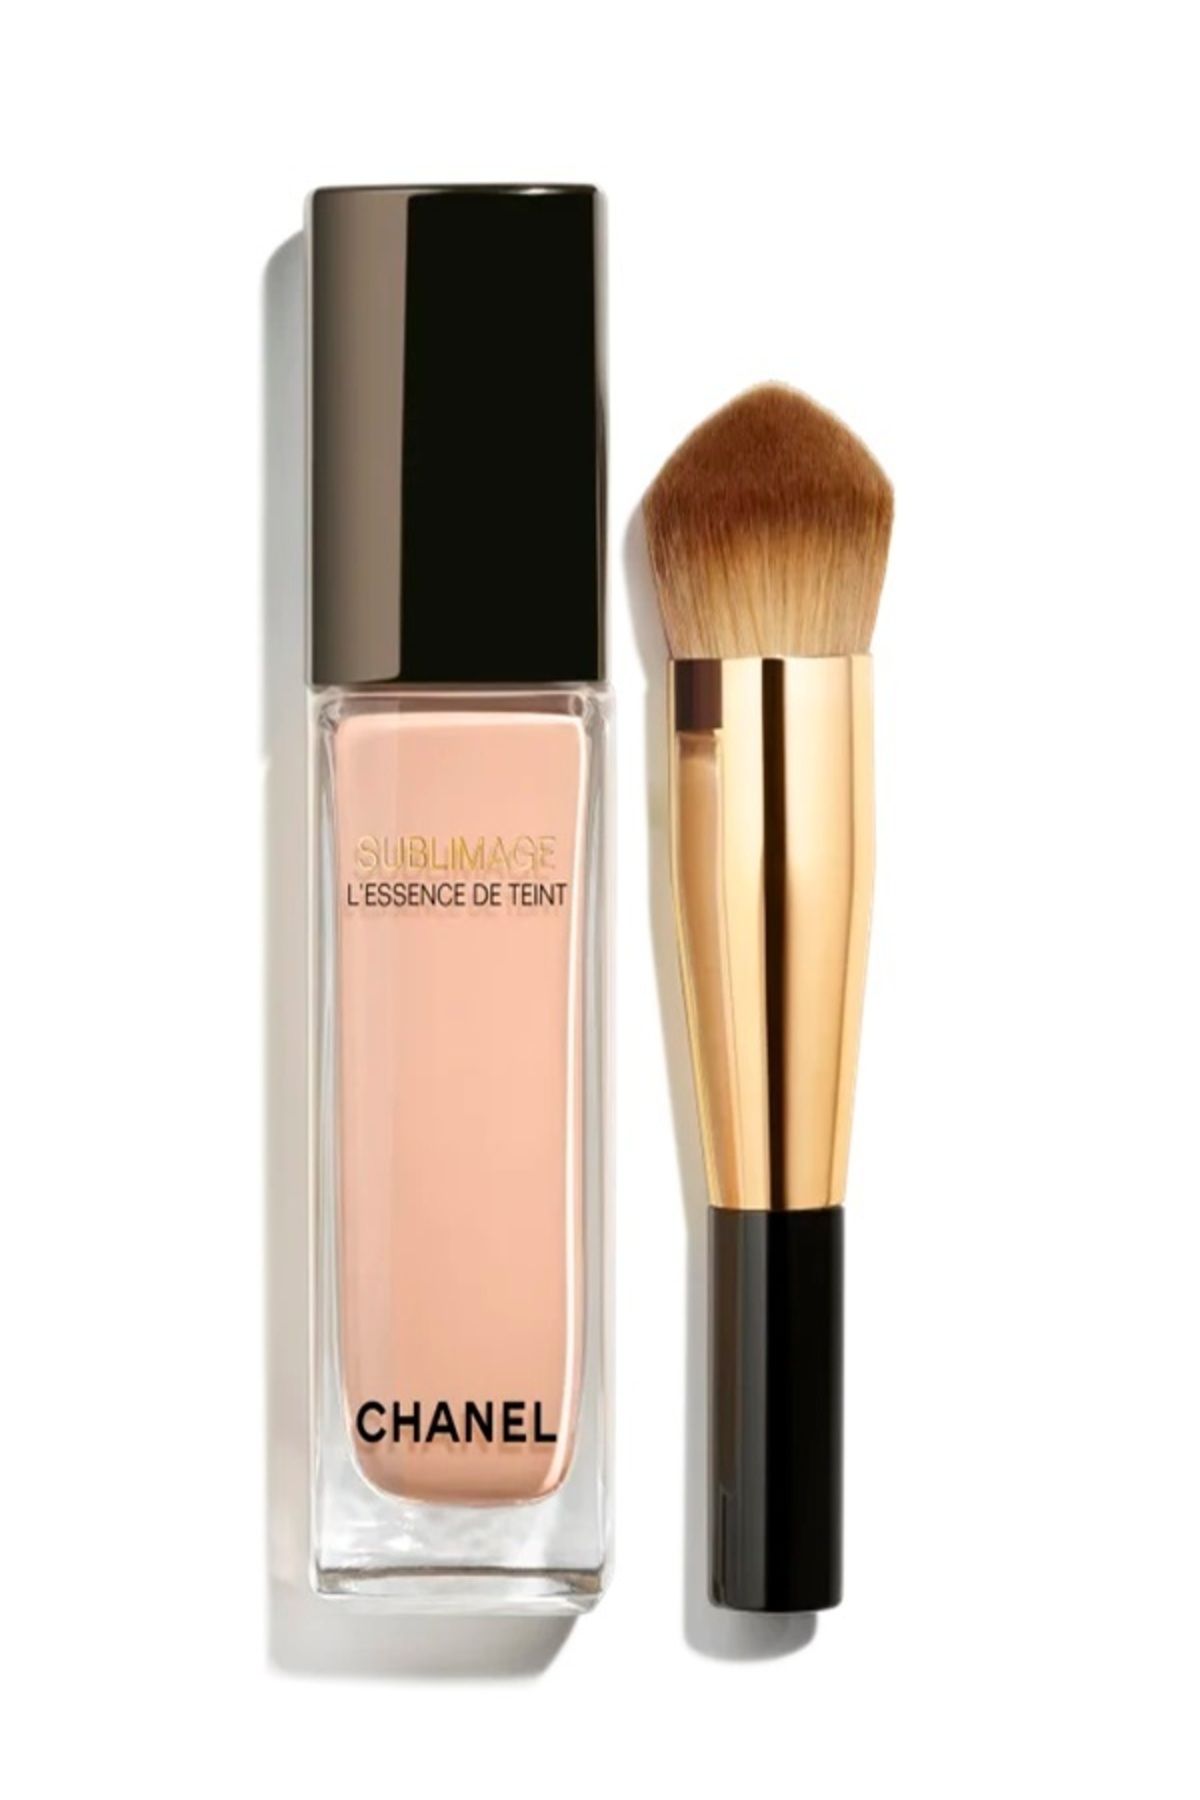 Chanel سرم مرطوب کننده کرم پودر رنگی SUBLIMAGE L'ESSENCE DE TEINT زیبایی و جذابیت بی نظیر برای پوست شما شماره BR12